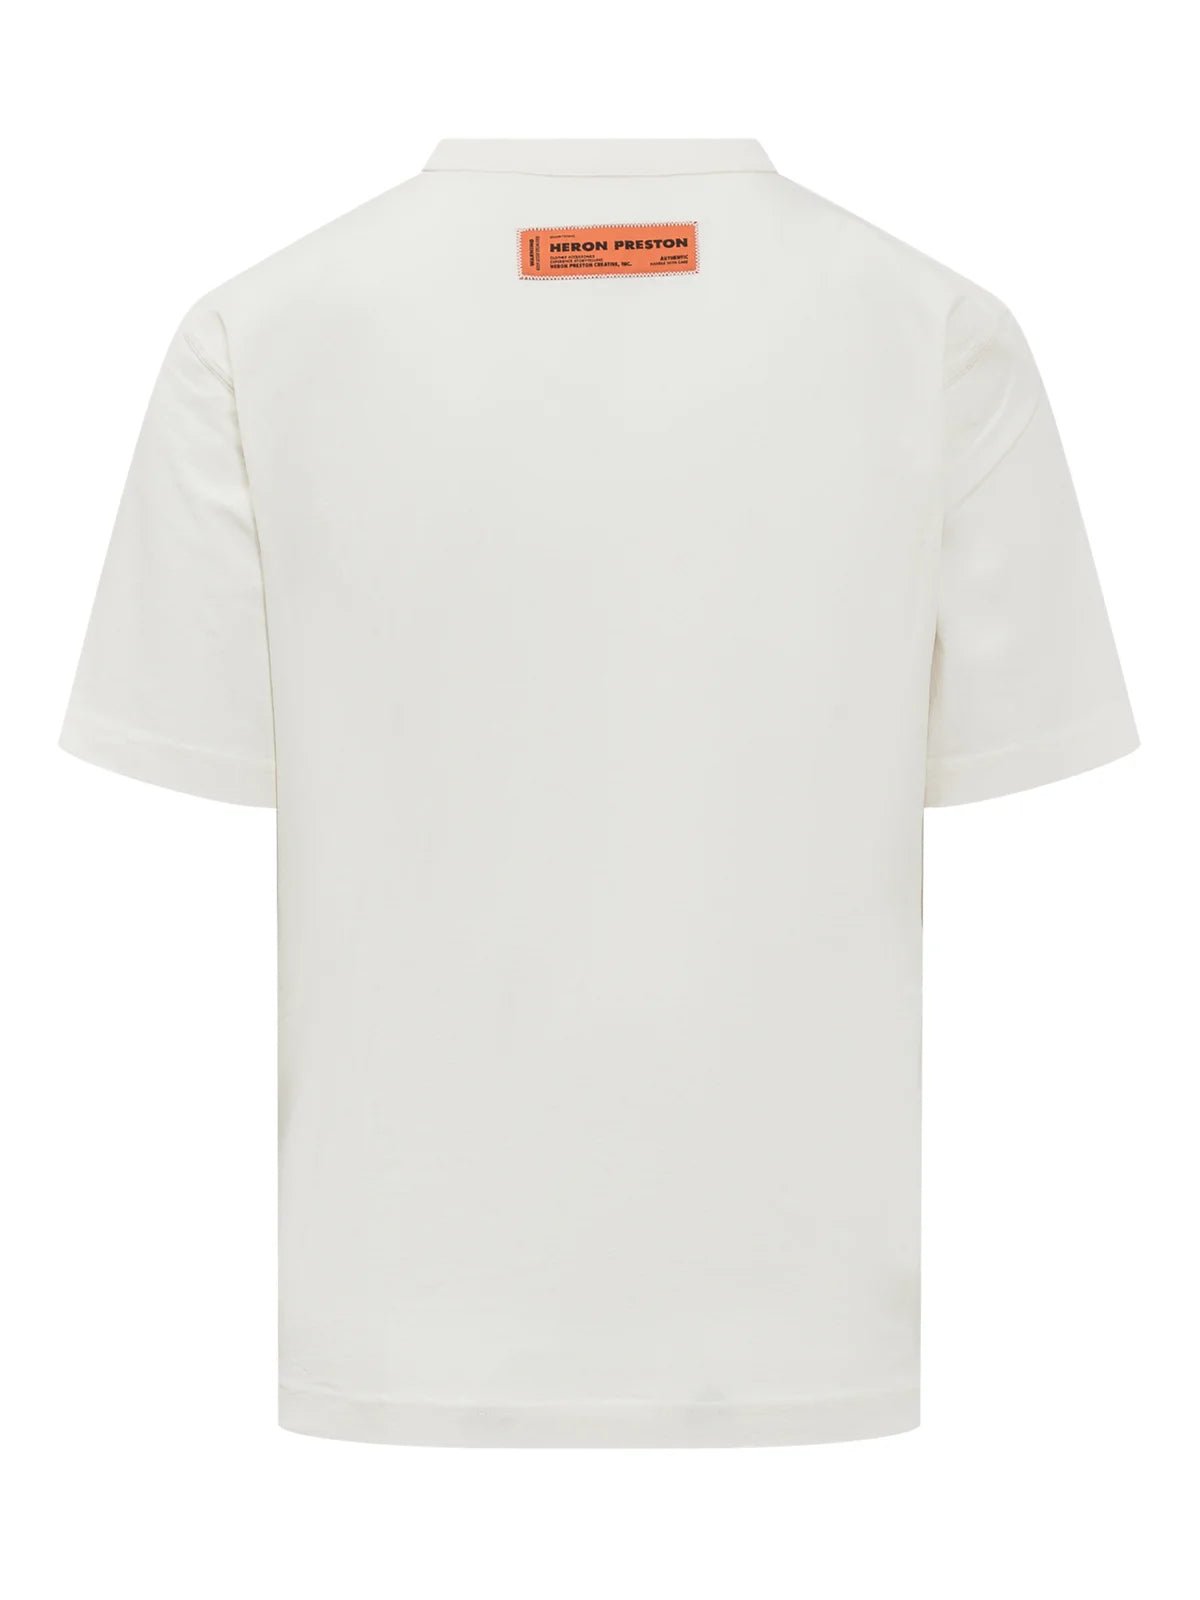 Heron Preston BW T-Shirt - White - Escape Menswear